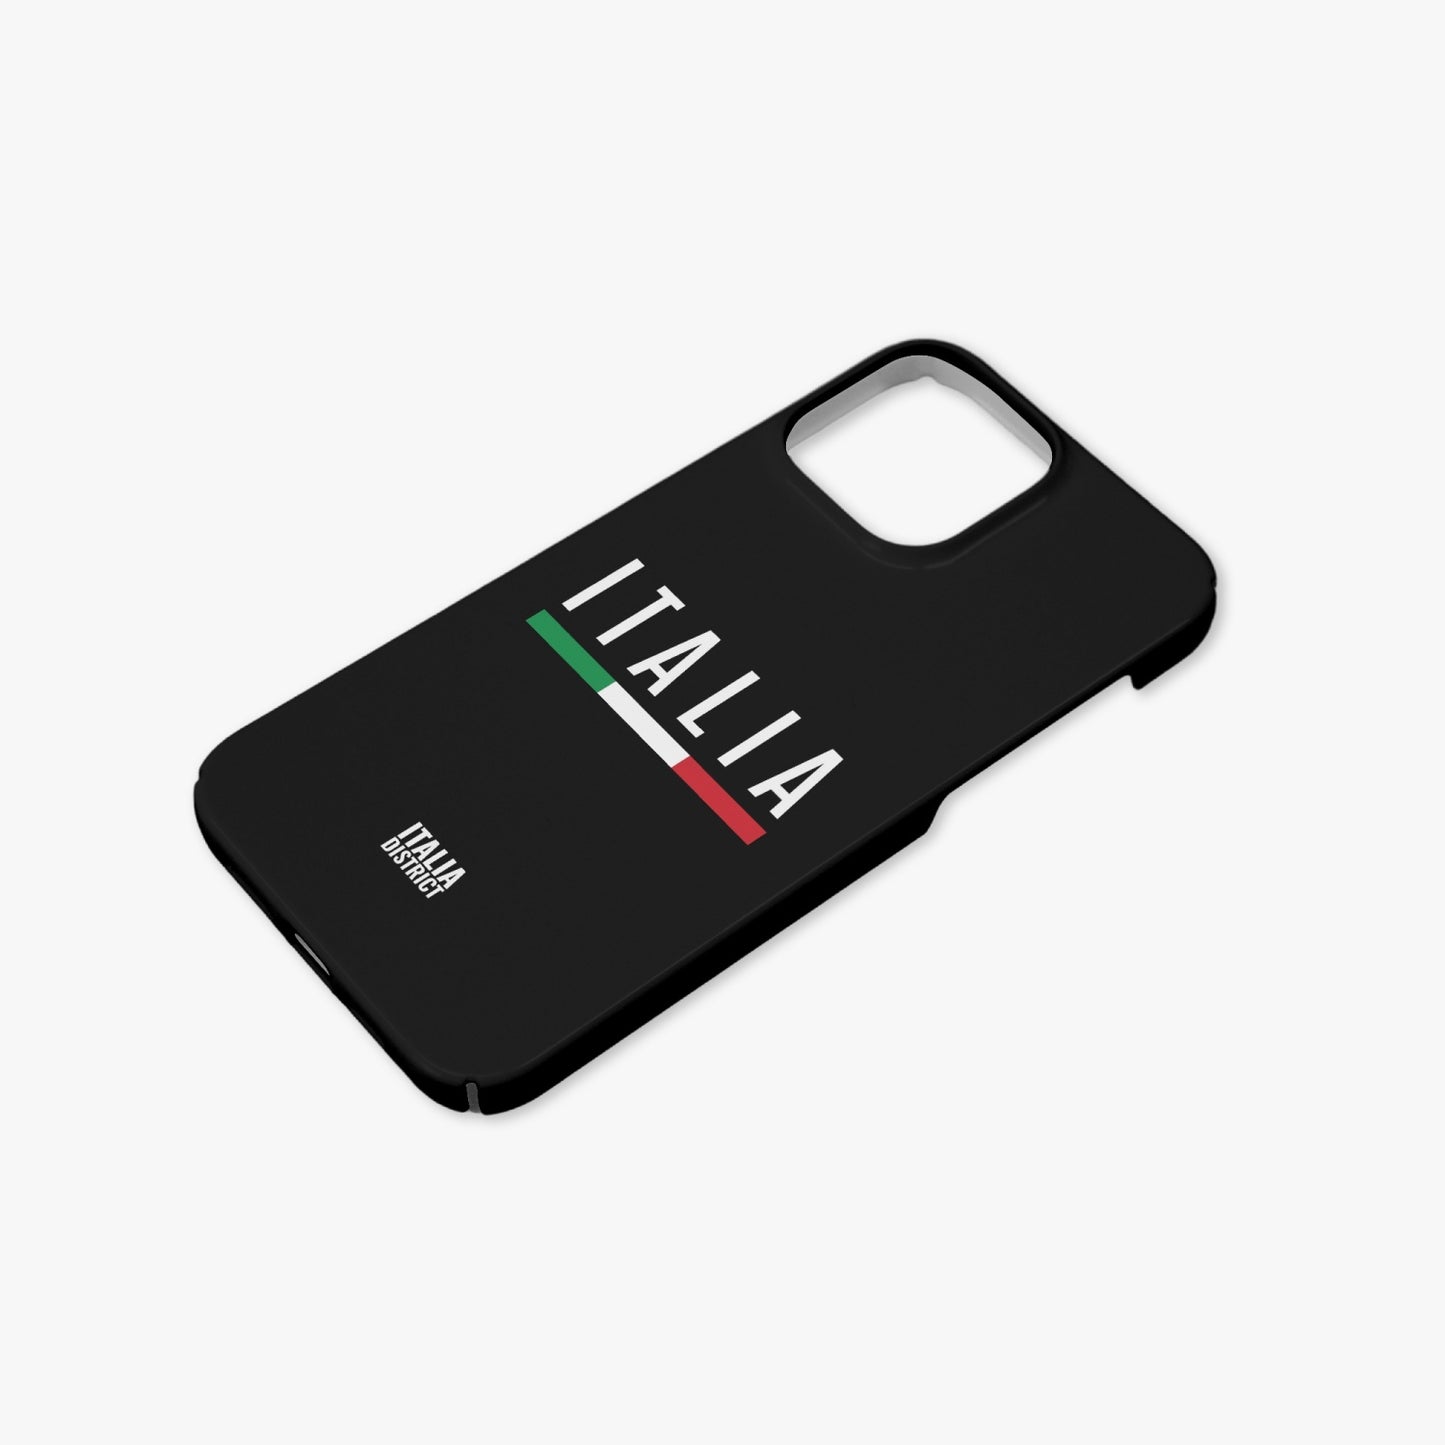 Italy Black Phone Case iPhone 13 Pro Max